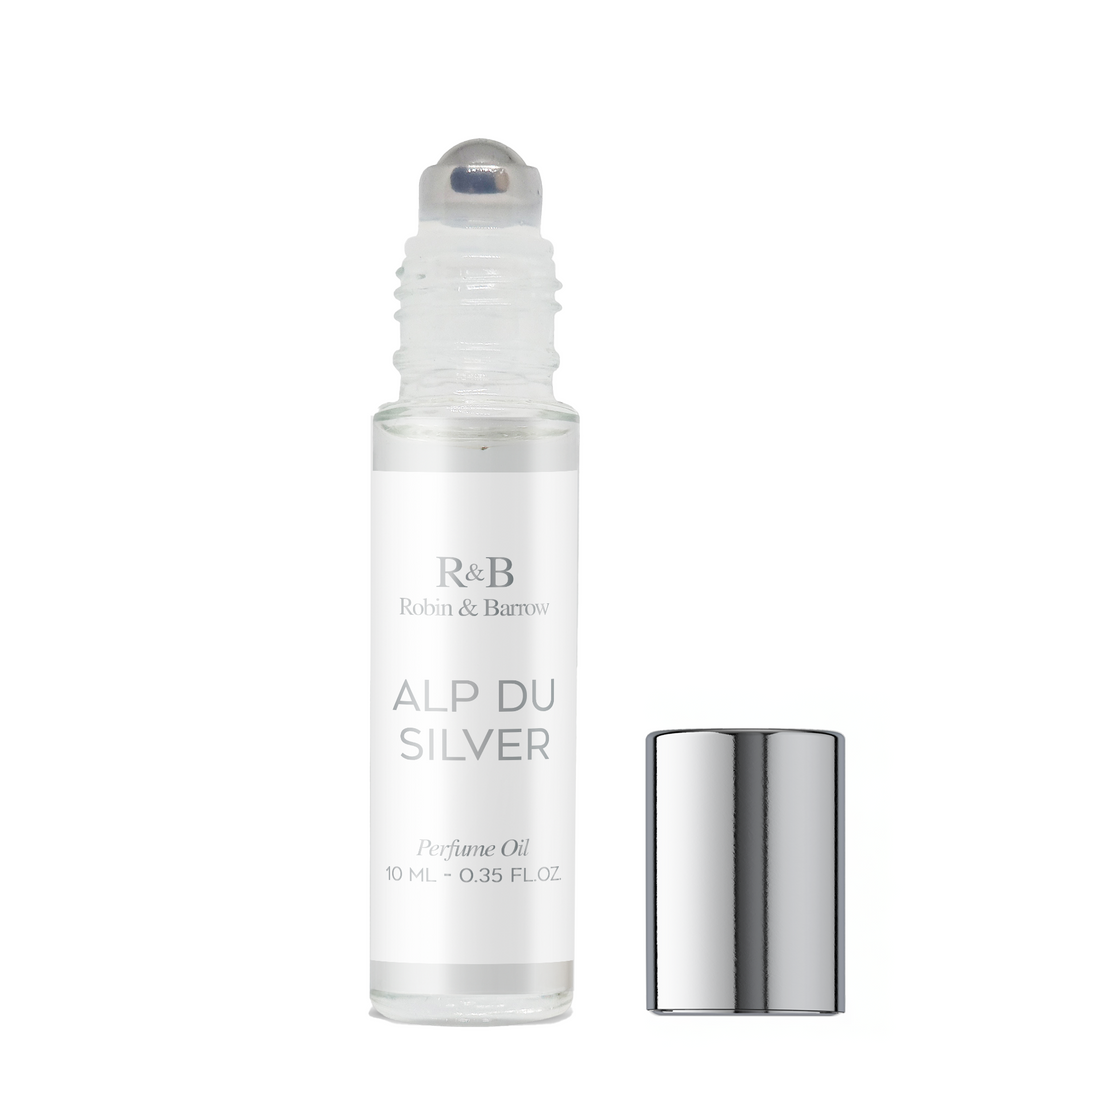 Alp Du Silver - Perfume Oil